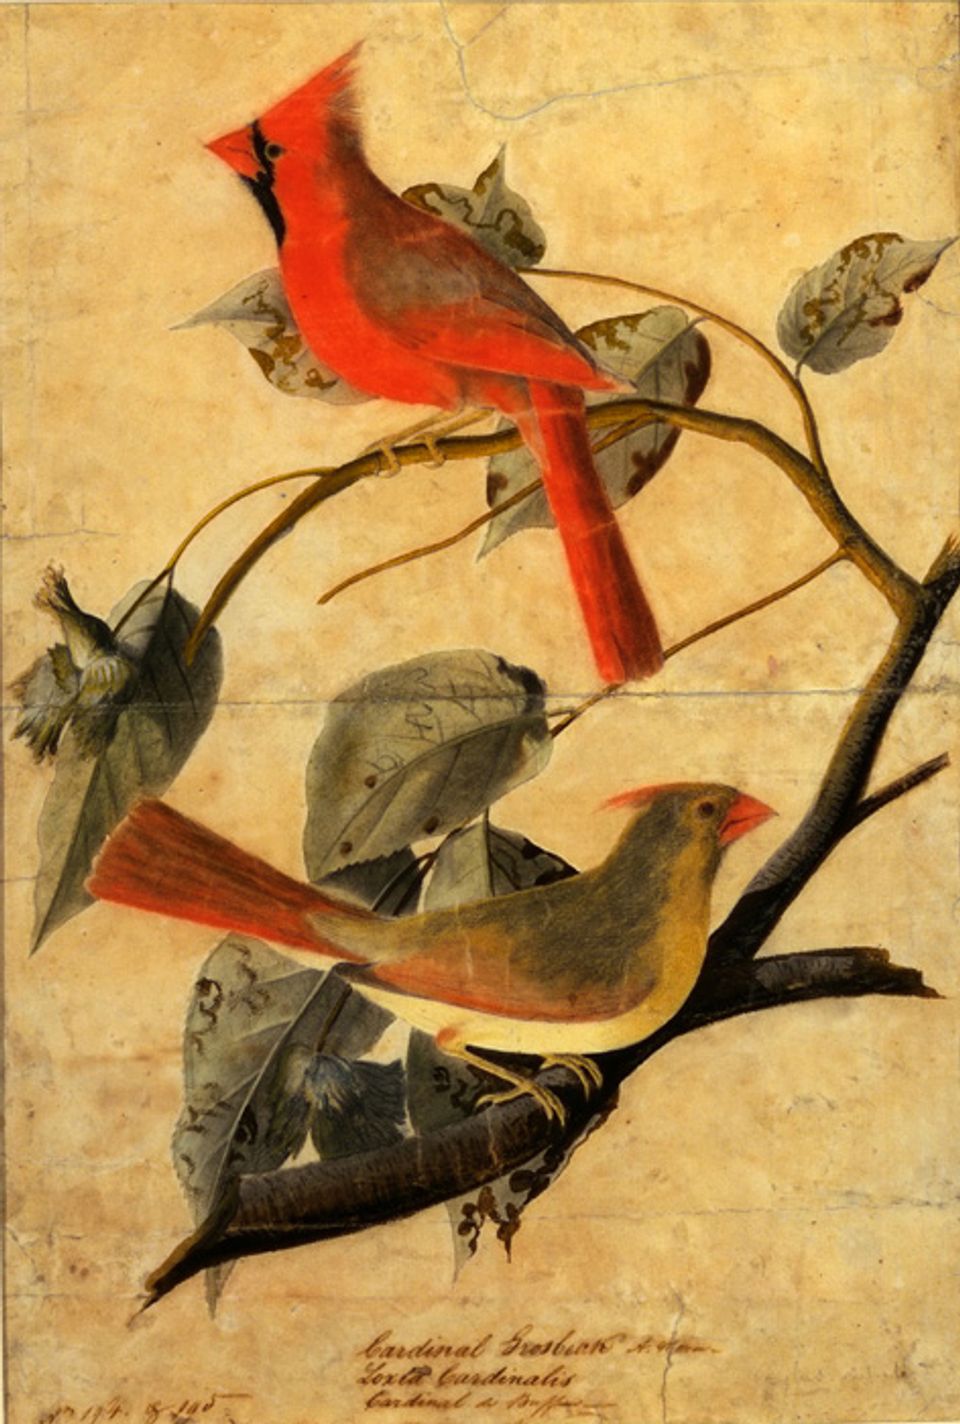 Audubon's drawing of a cardinal grosbeak on a branch.